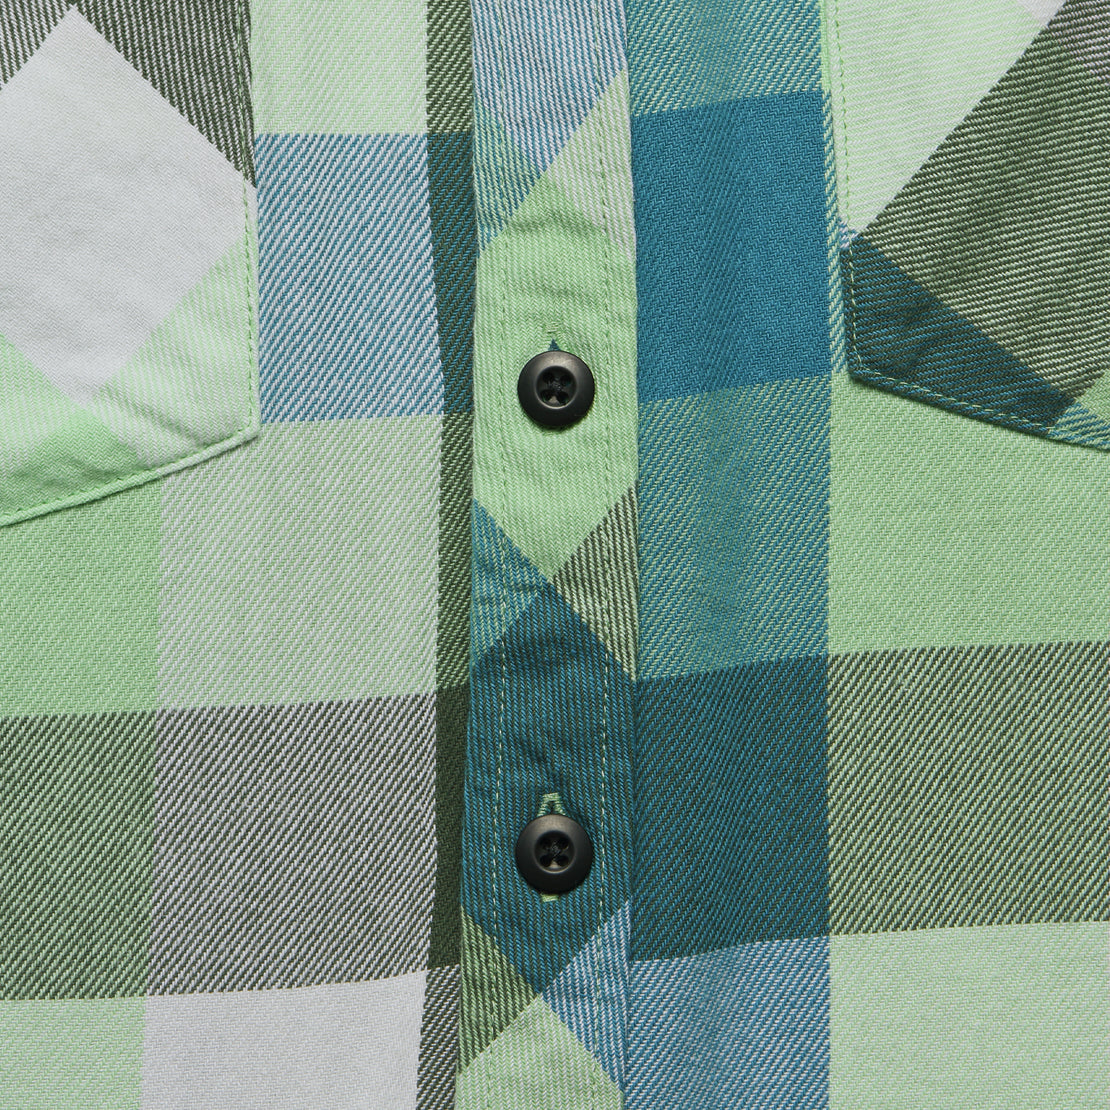 Plaid Mountain Shirt - Green Big Plaid - Topo Designs - STAG Provisions - Tops - L/S Woven - Plaid